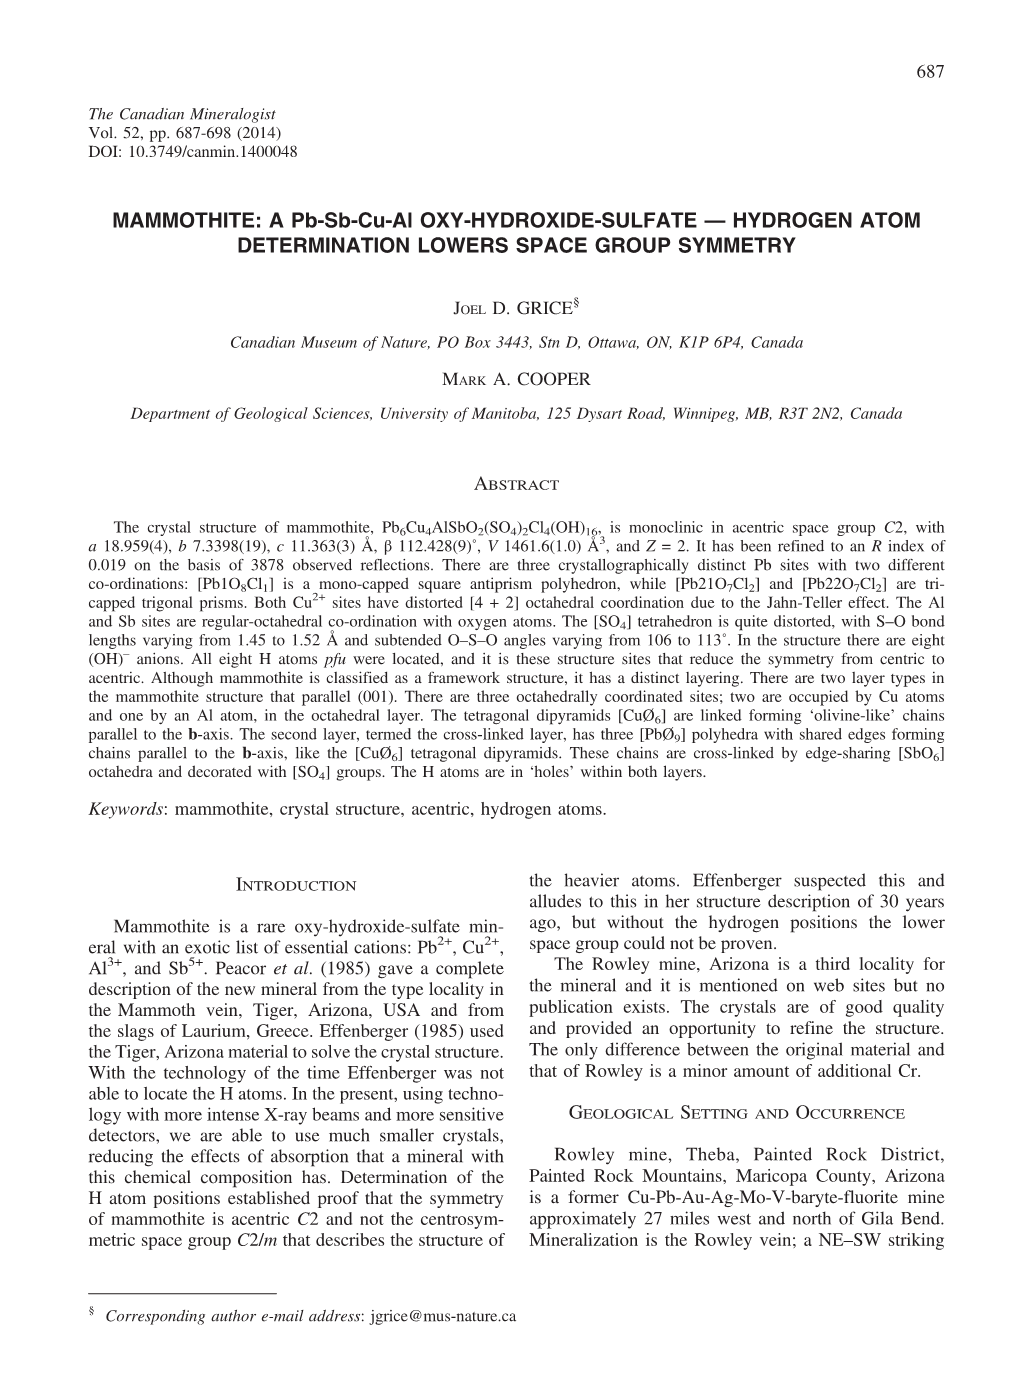 MAMMOTHITE: a Pb-Sb-Cu-Al OXY-HYDROXIDE-SULFATE — HYDROGEN ATOM DETERMINATION LOWERS SPACE GROUP SYMMETRY